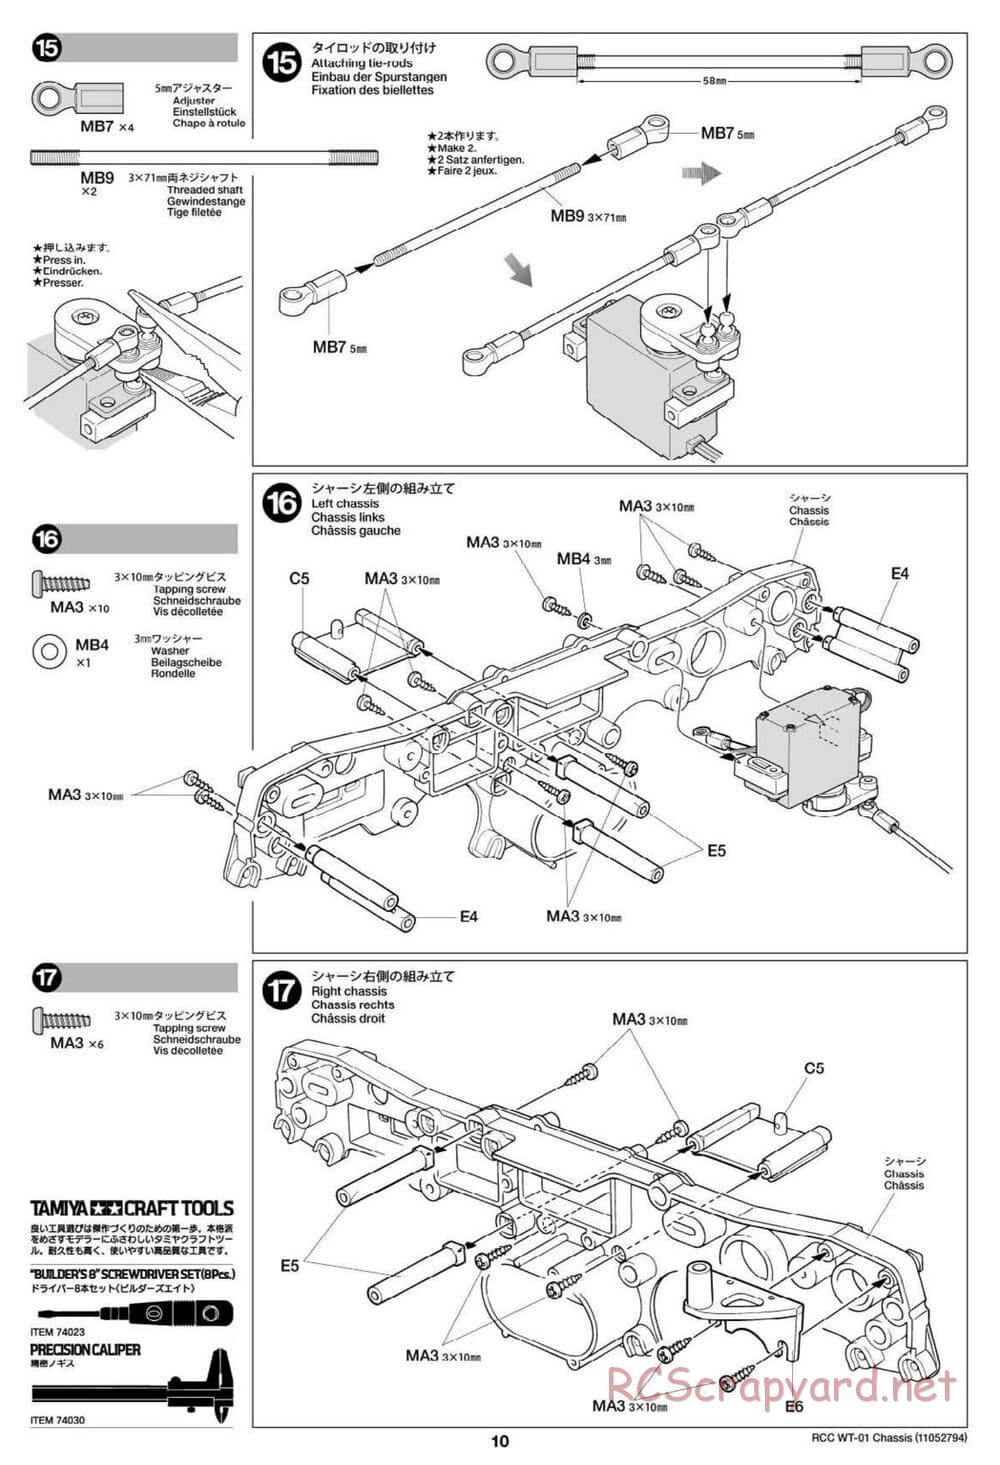 Tamiya - Mud Blaster II - WT-01 Chassis - Manual - Page 10